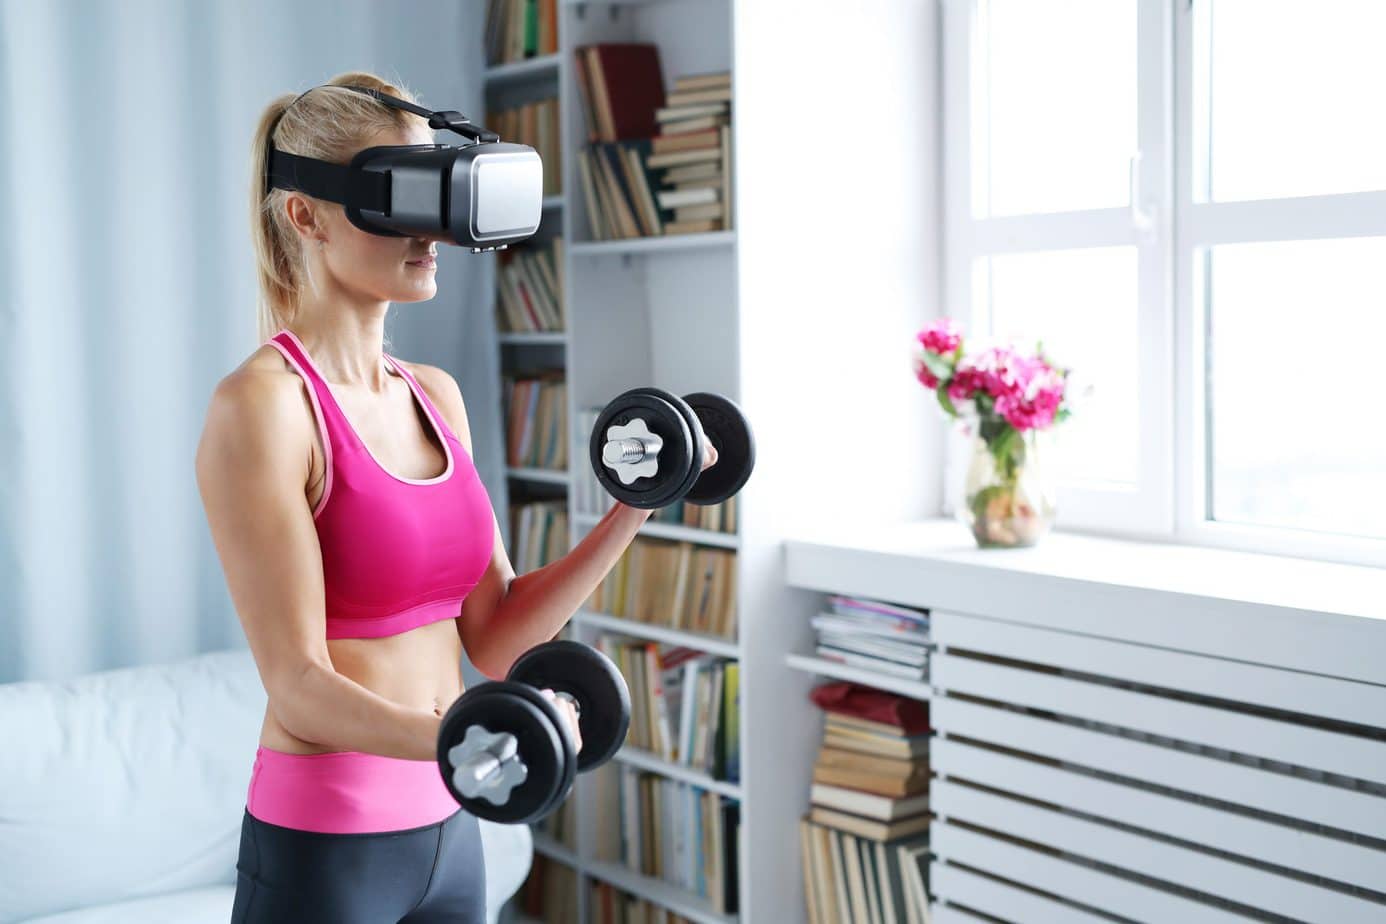 VR fitness – a Matrix-like workout!